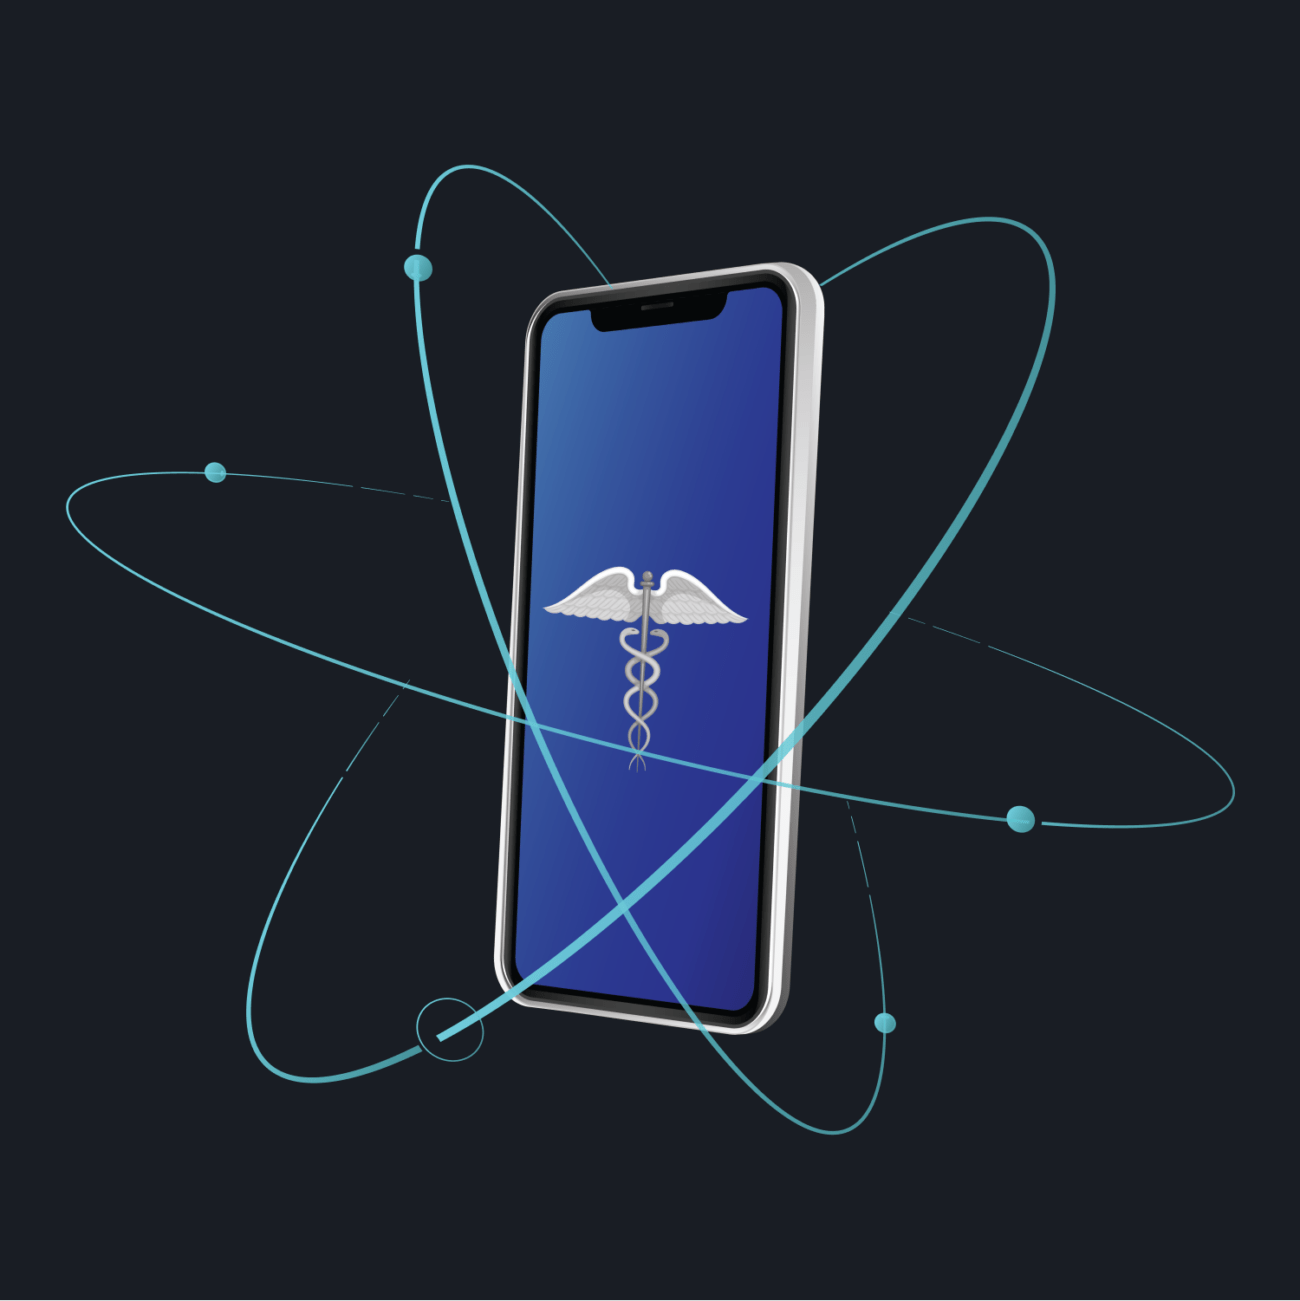 Best Doctor Personalized App, Doctor's EMR App